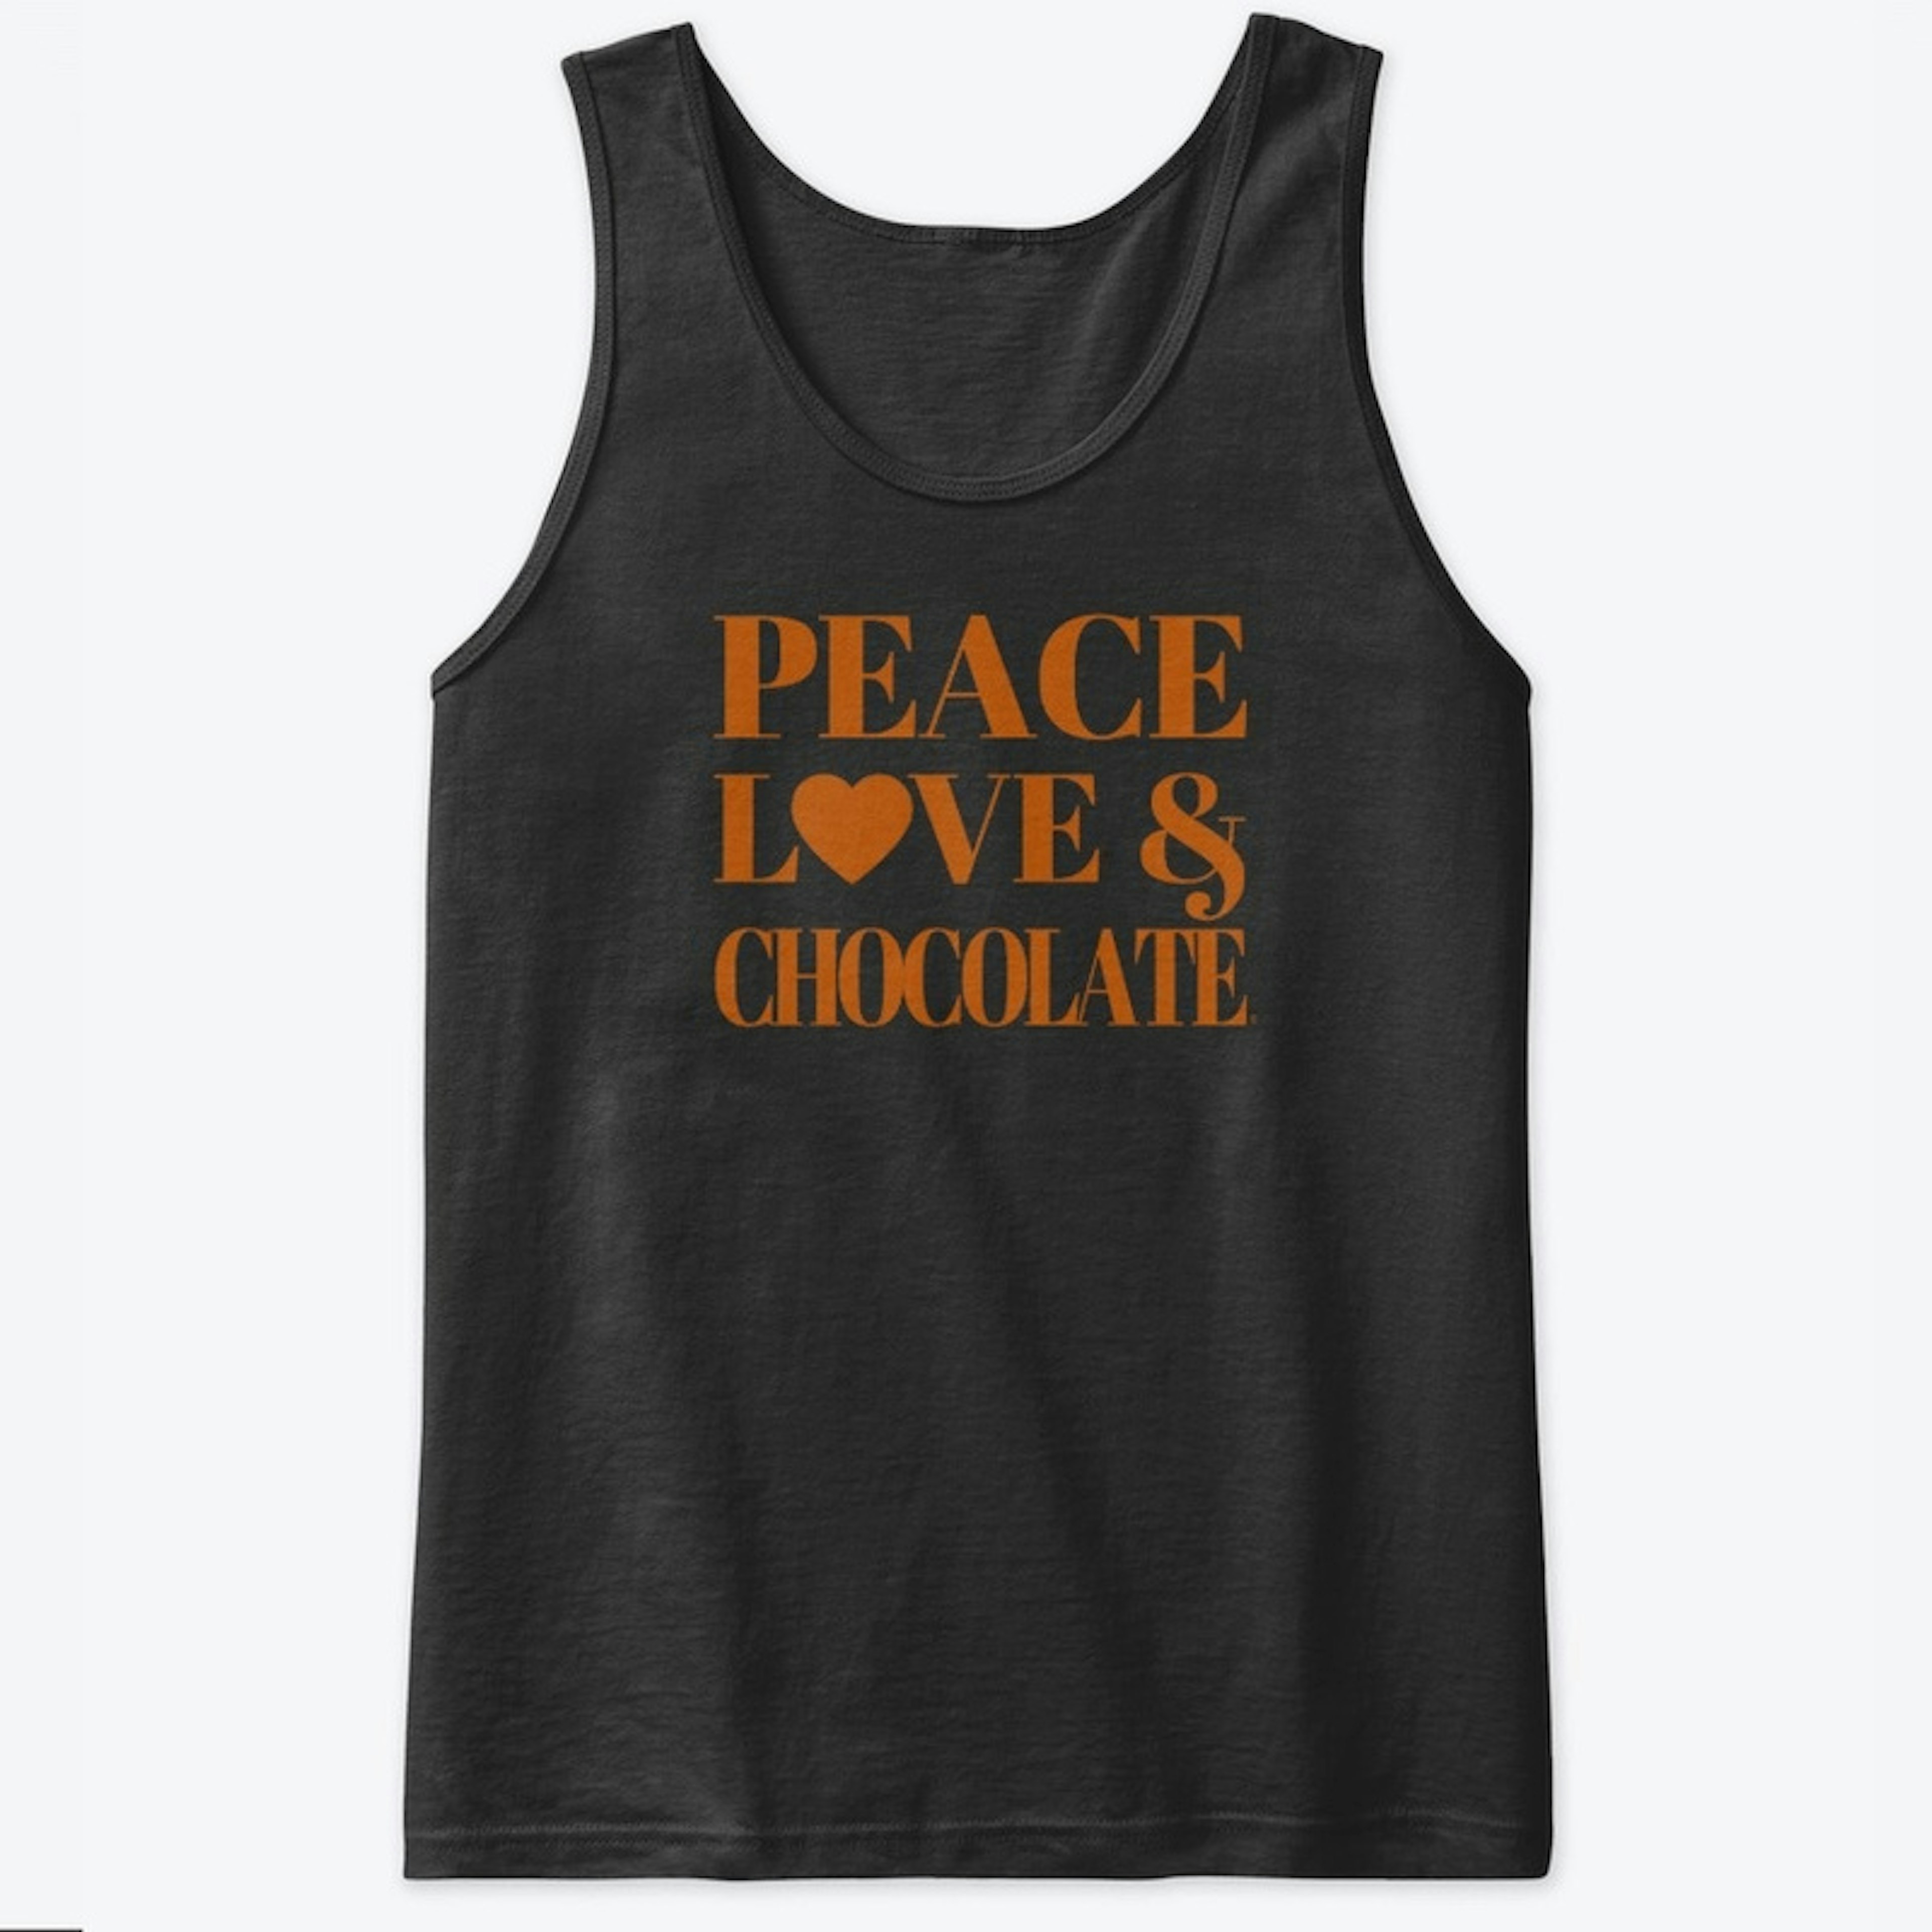 Peace, Love & Chocolate